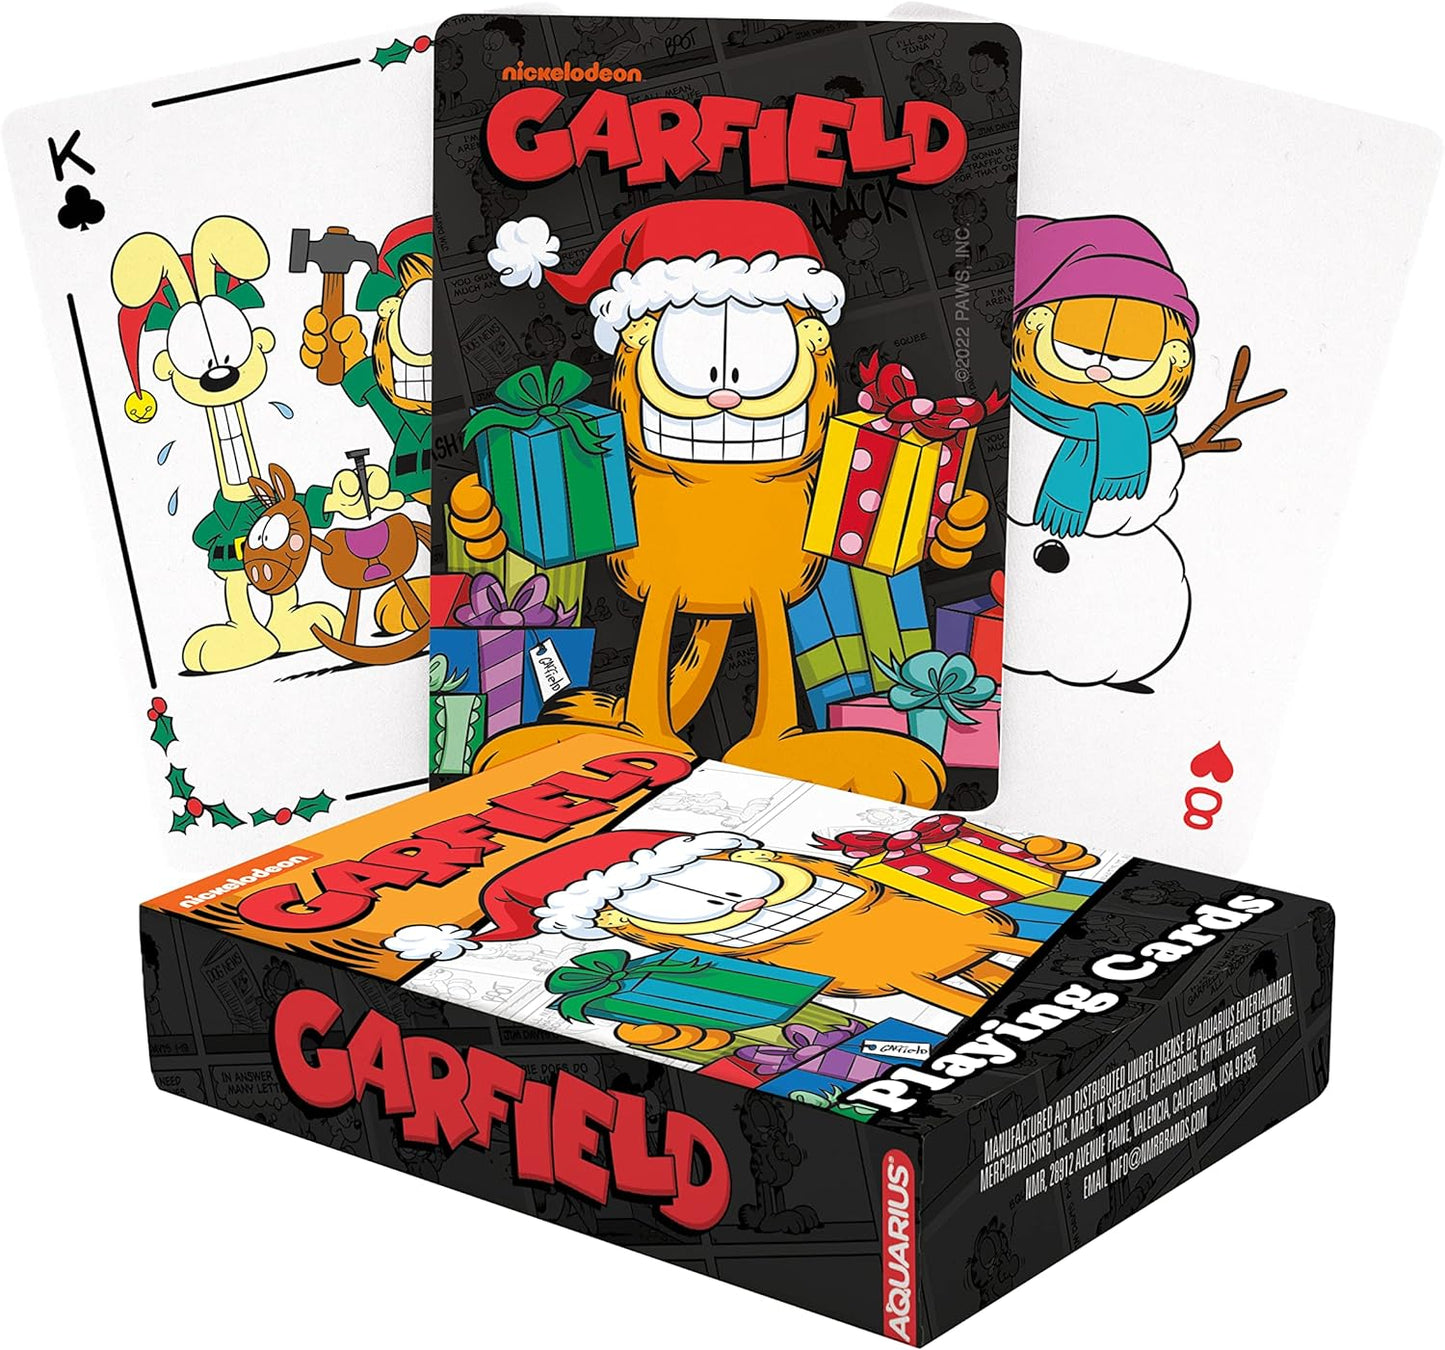 Garfield Christmas Playing Cards by Aquarius